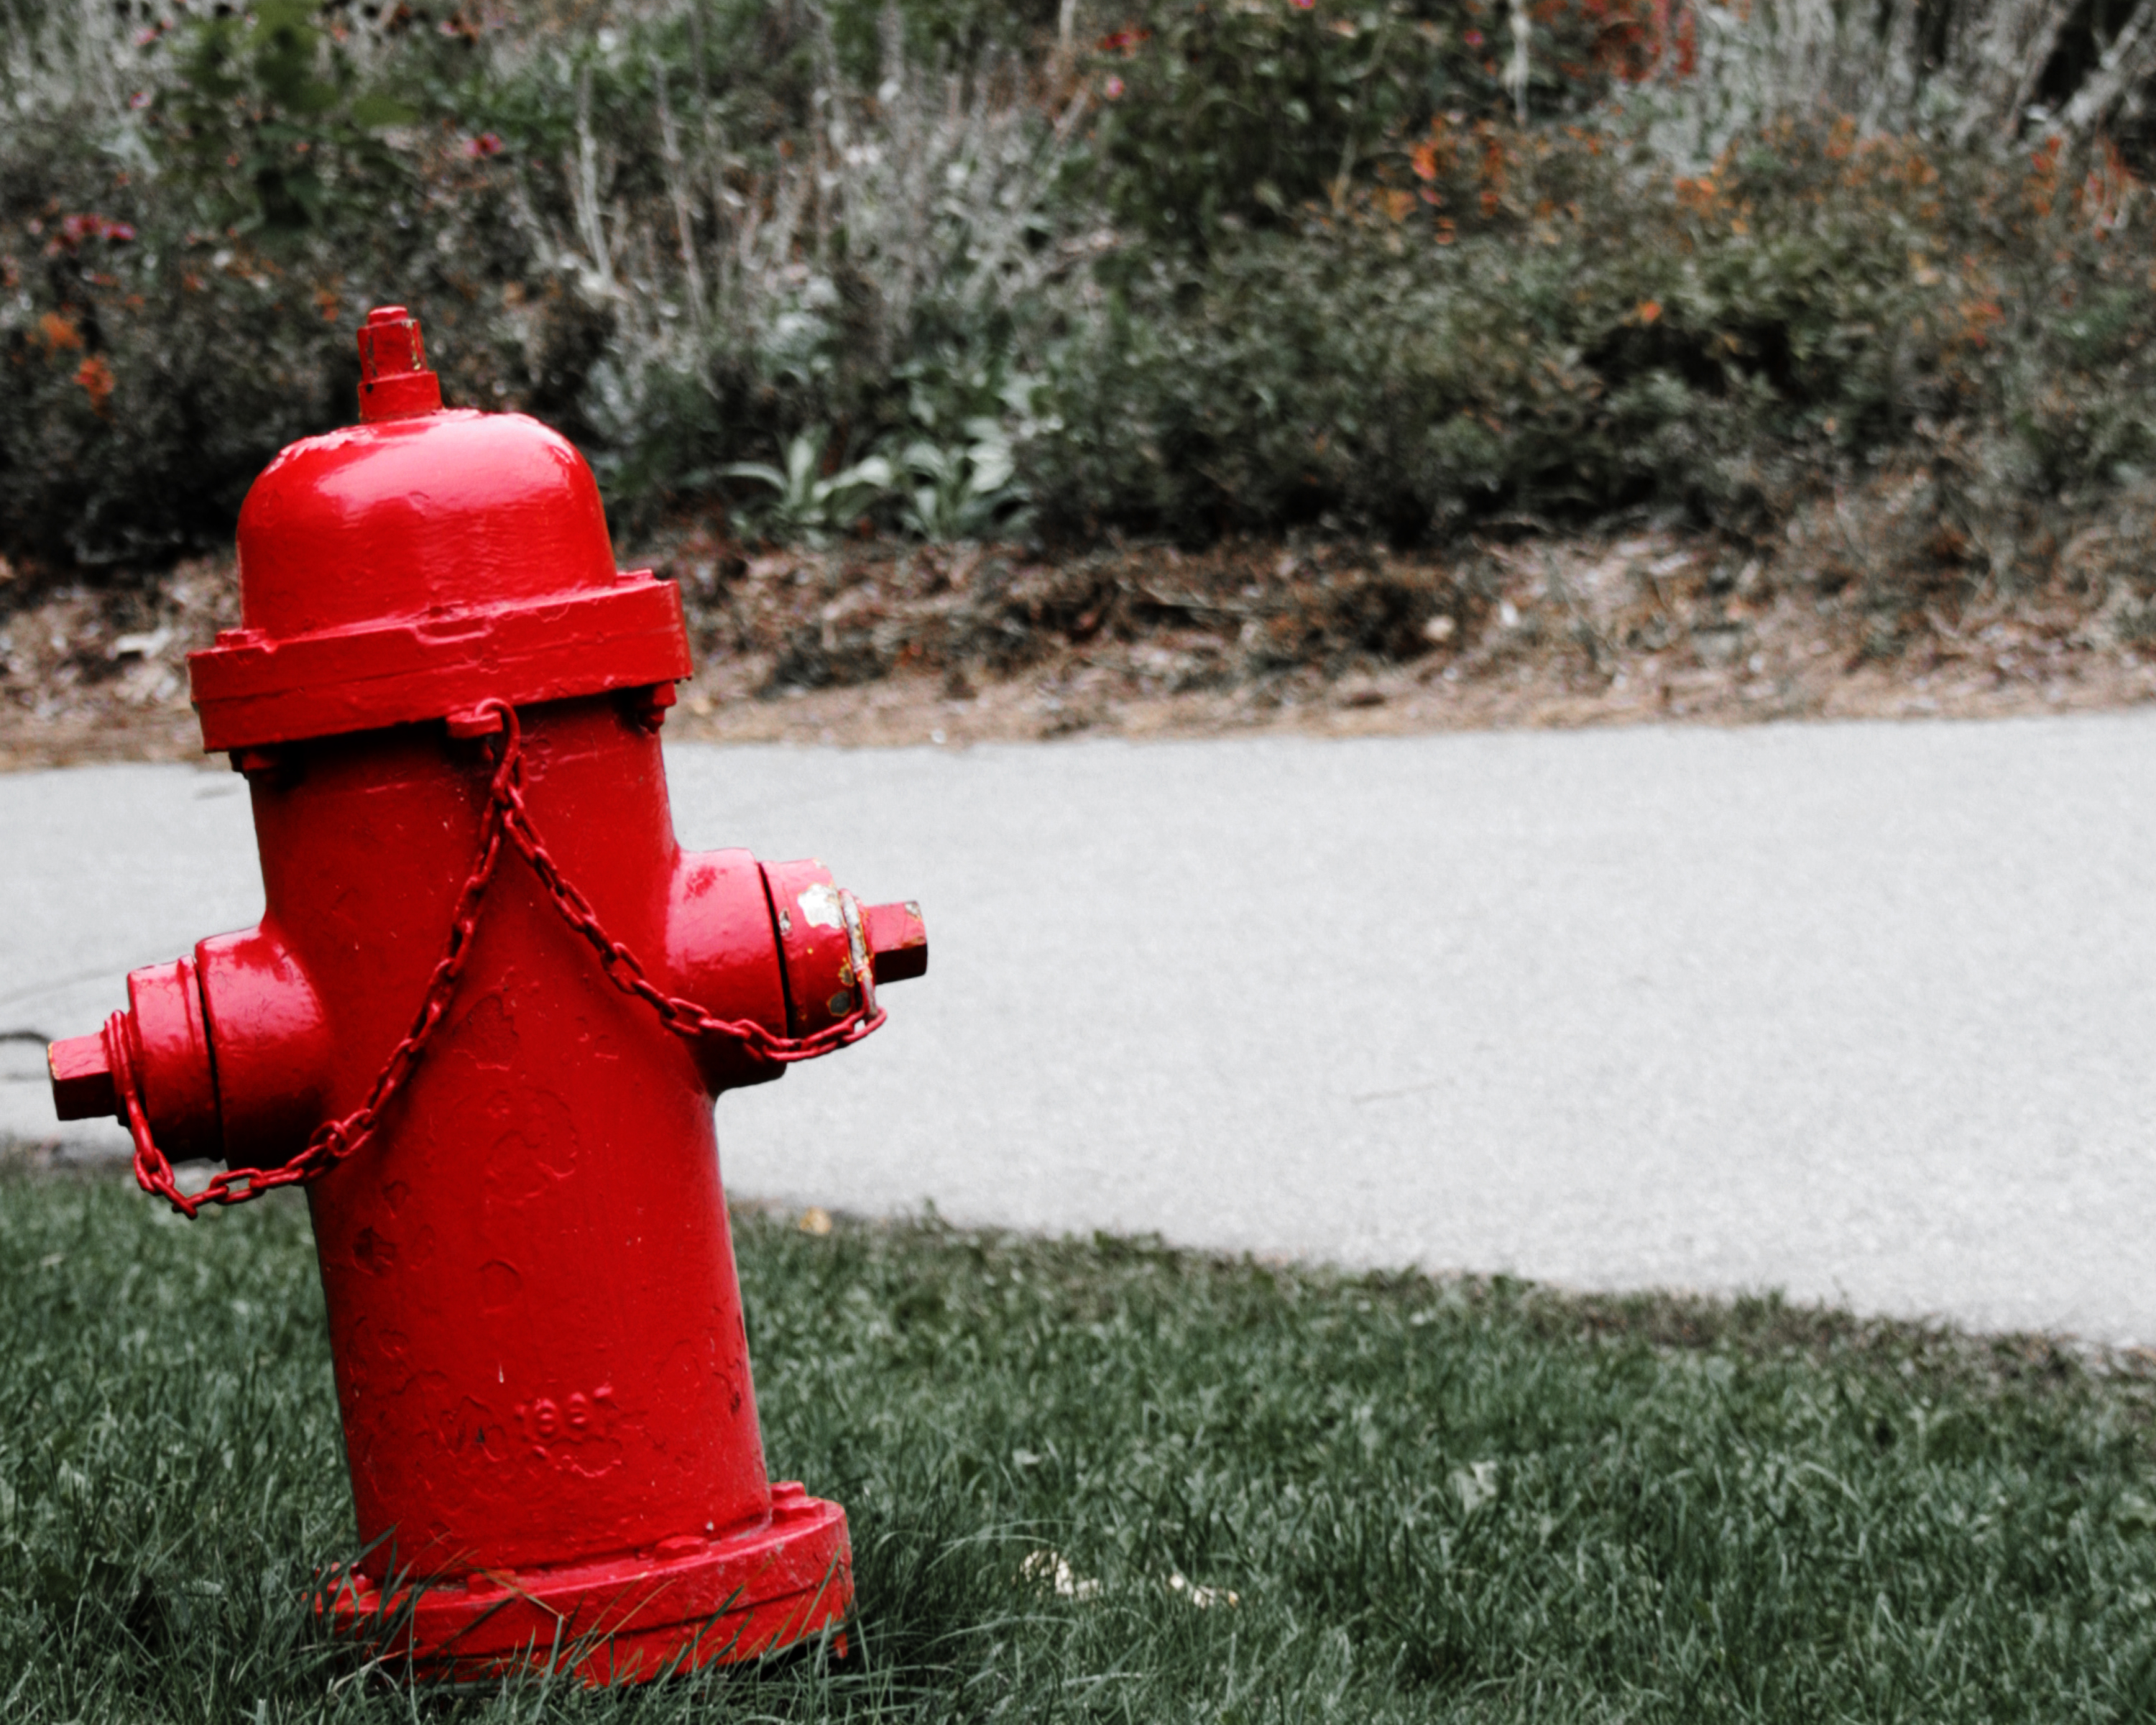 Quadruped fire hydrants